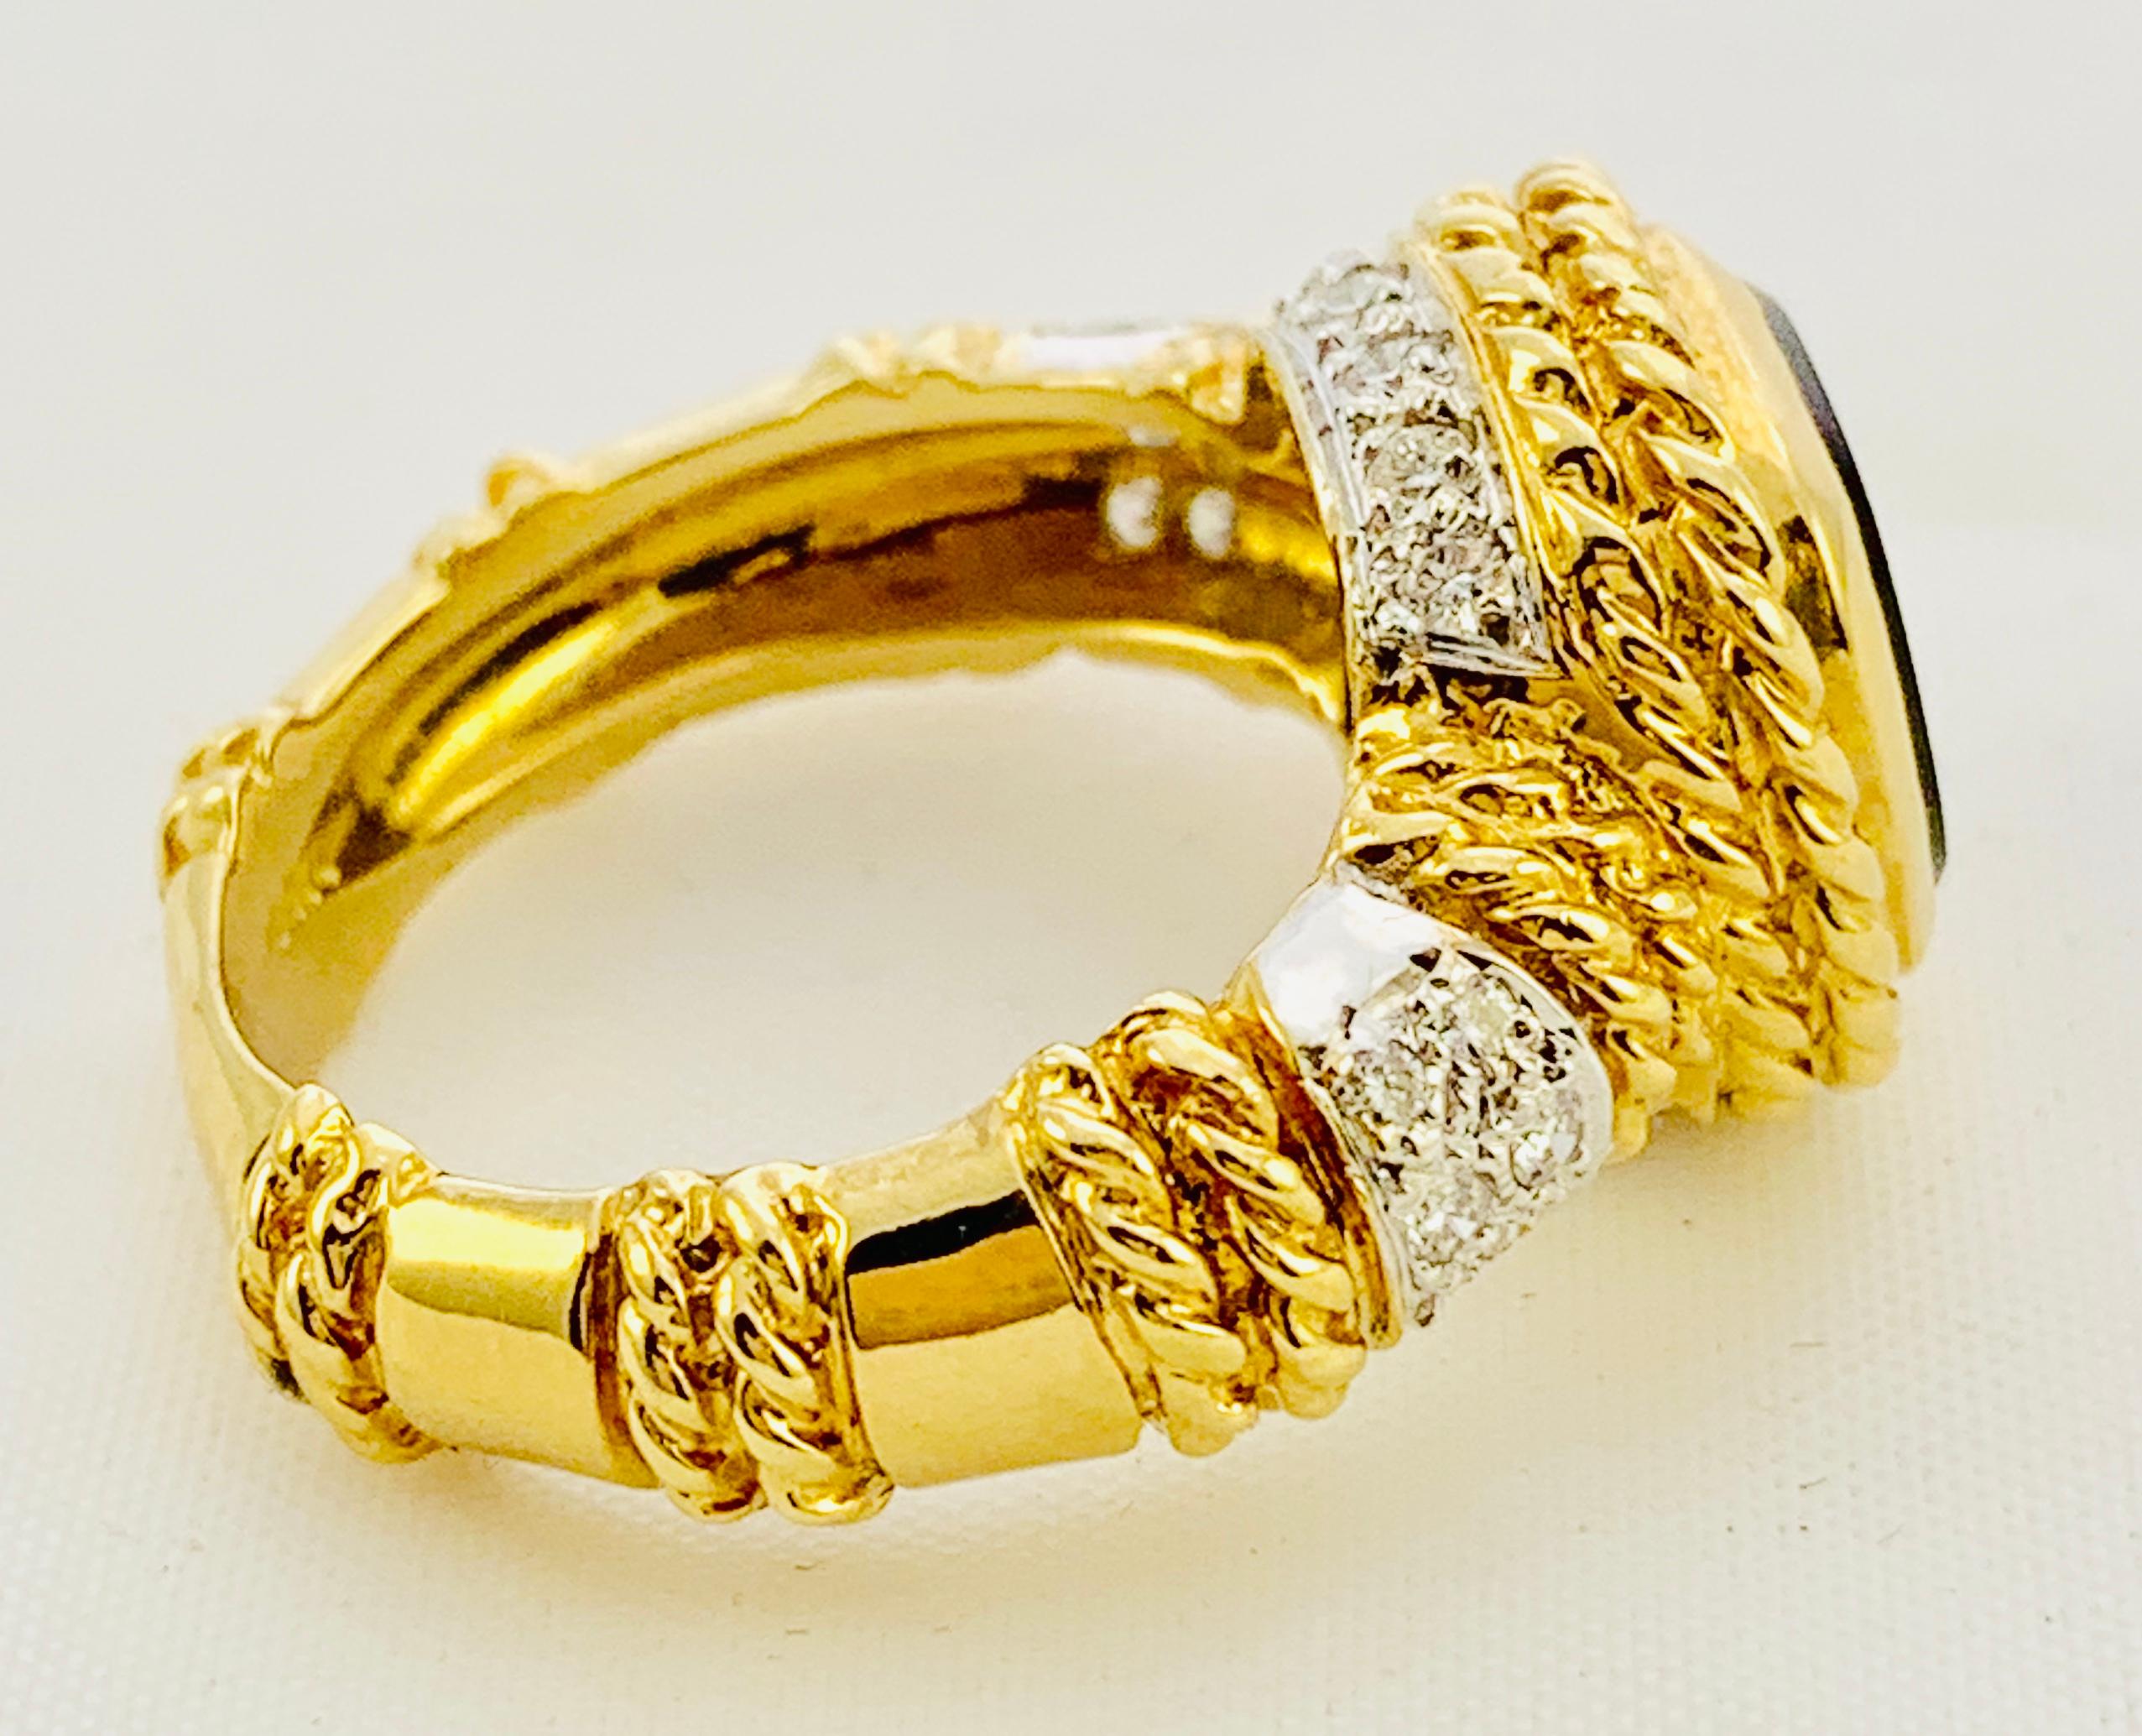 Women's Designer Cassis 18K yellow Gold, Diamond & Onyx ladies Ring Size 5.75 